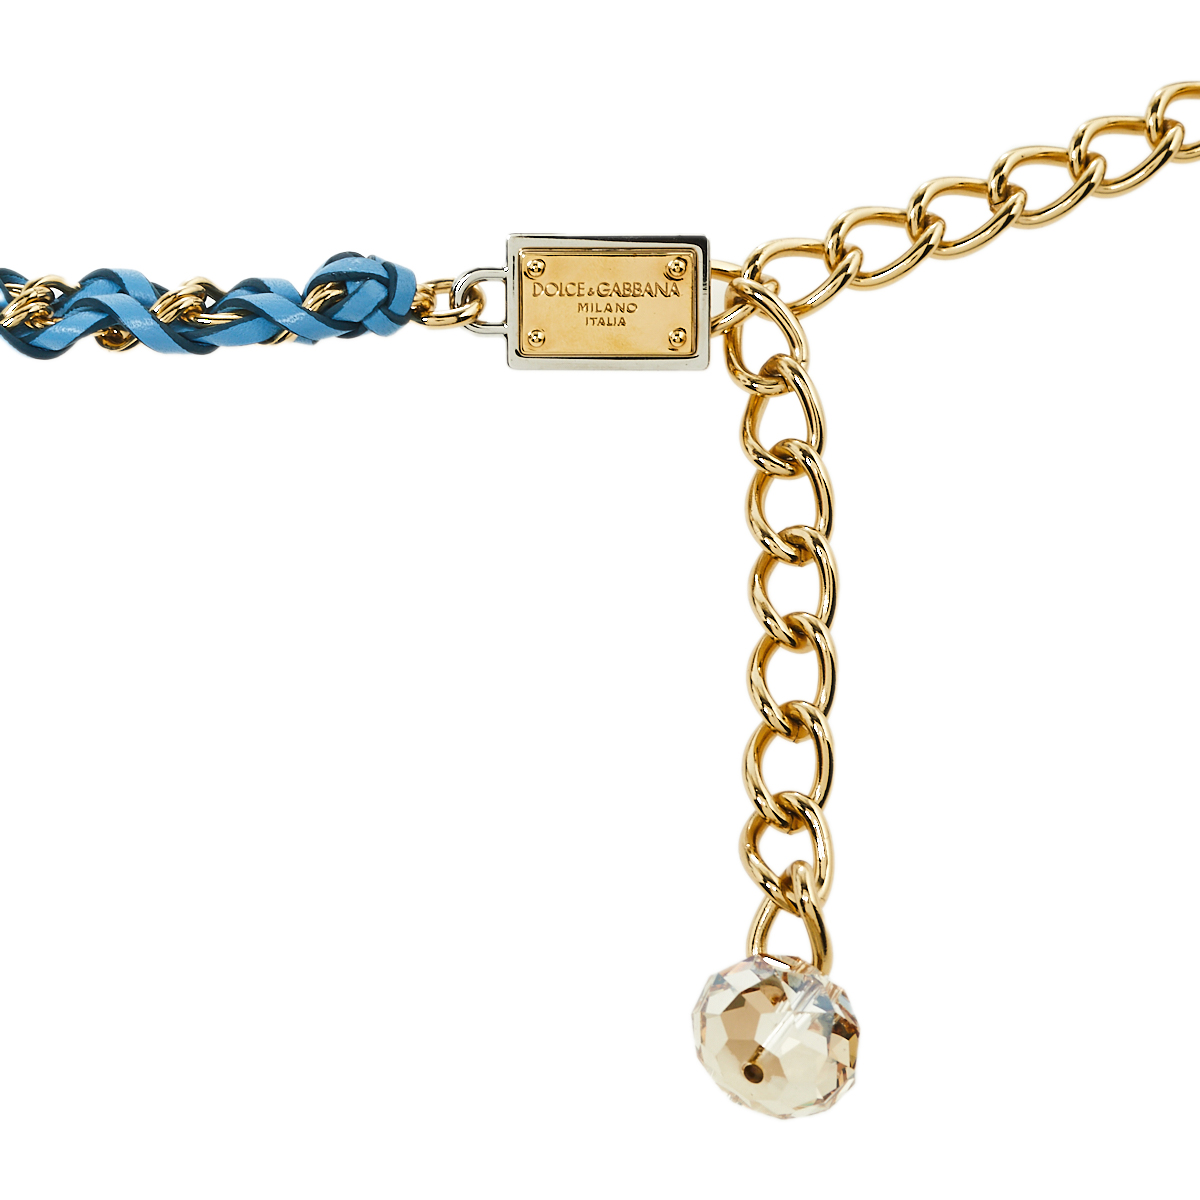 

Dolce & Gabbana Blue Braided Leather Gold Tone Chain Belt, Navy blue